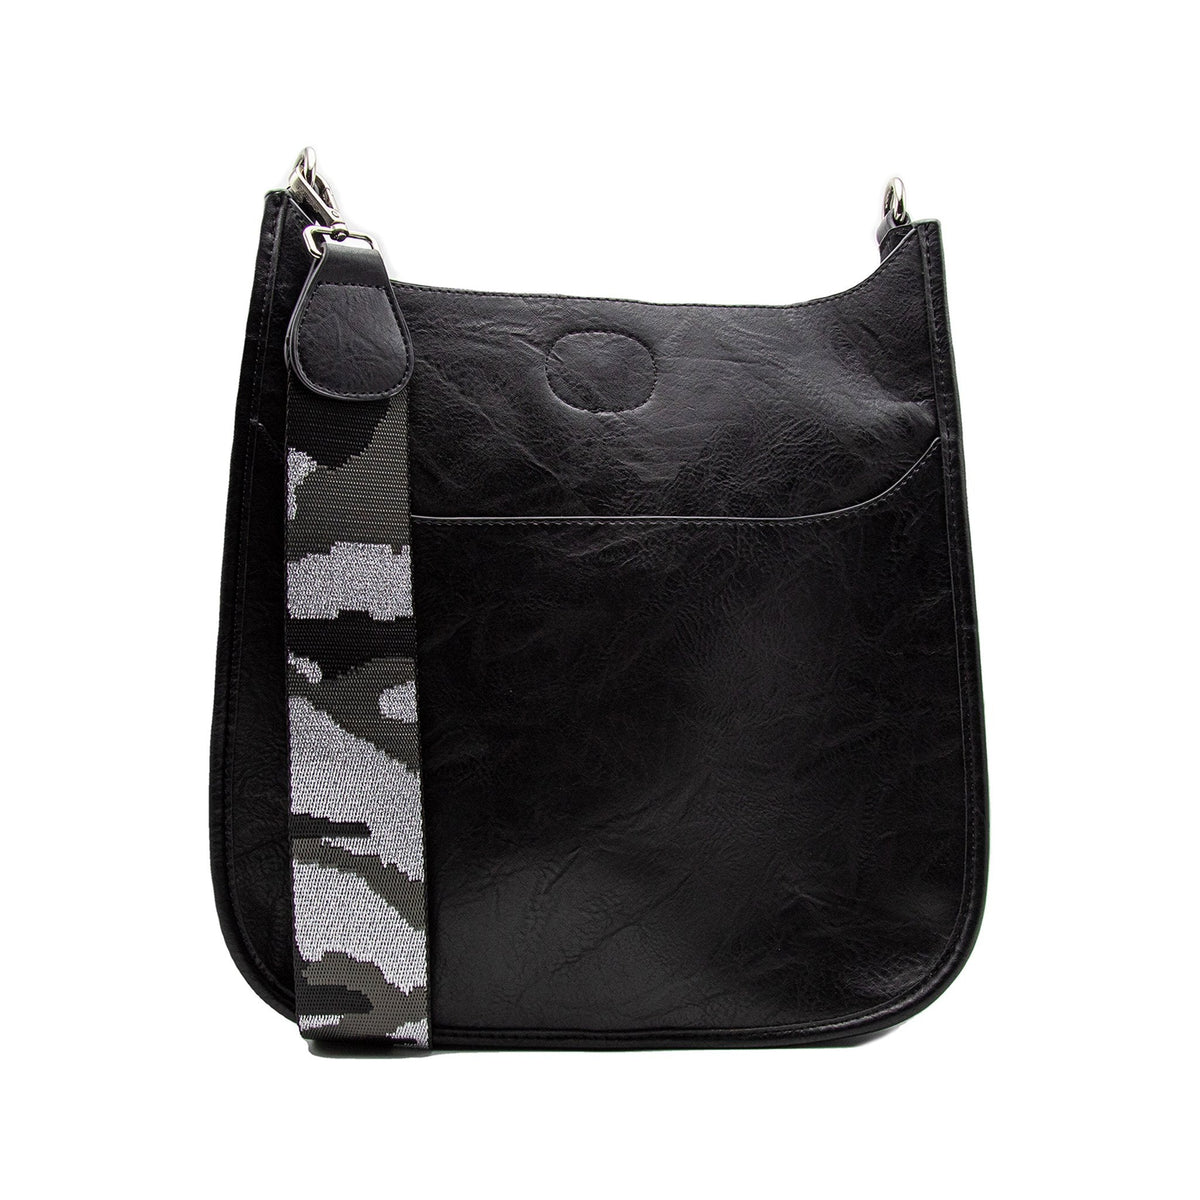 AH-DORNED Mini Vegan Crossbody Bag in Black With Three Straps in EUC.